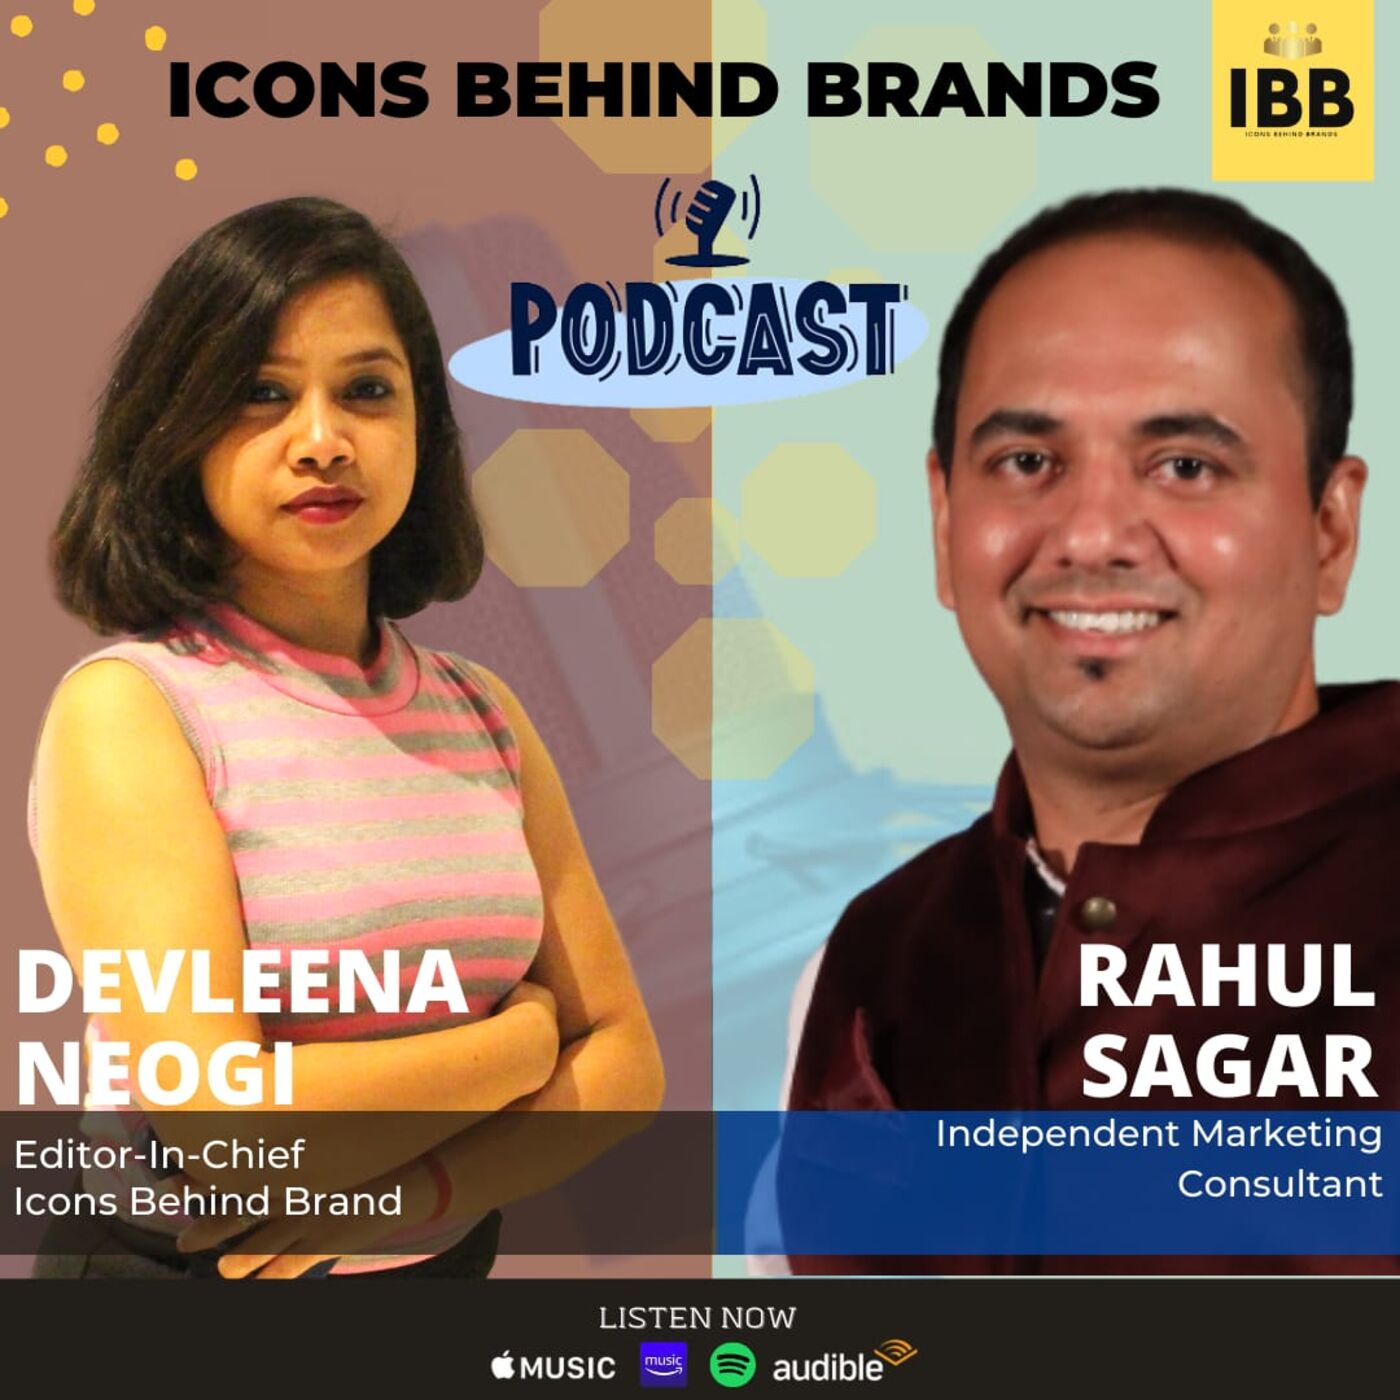 Brand Marketing Leader and Expert, Mr. Rahul Sagar Shares his Marketing Insights